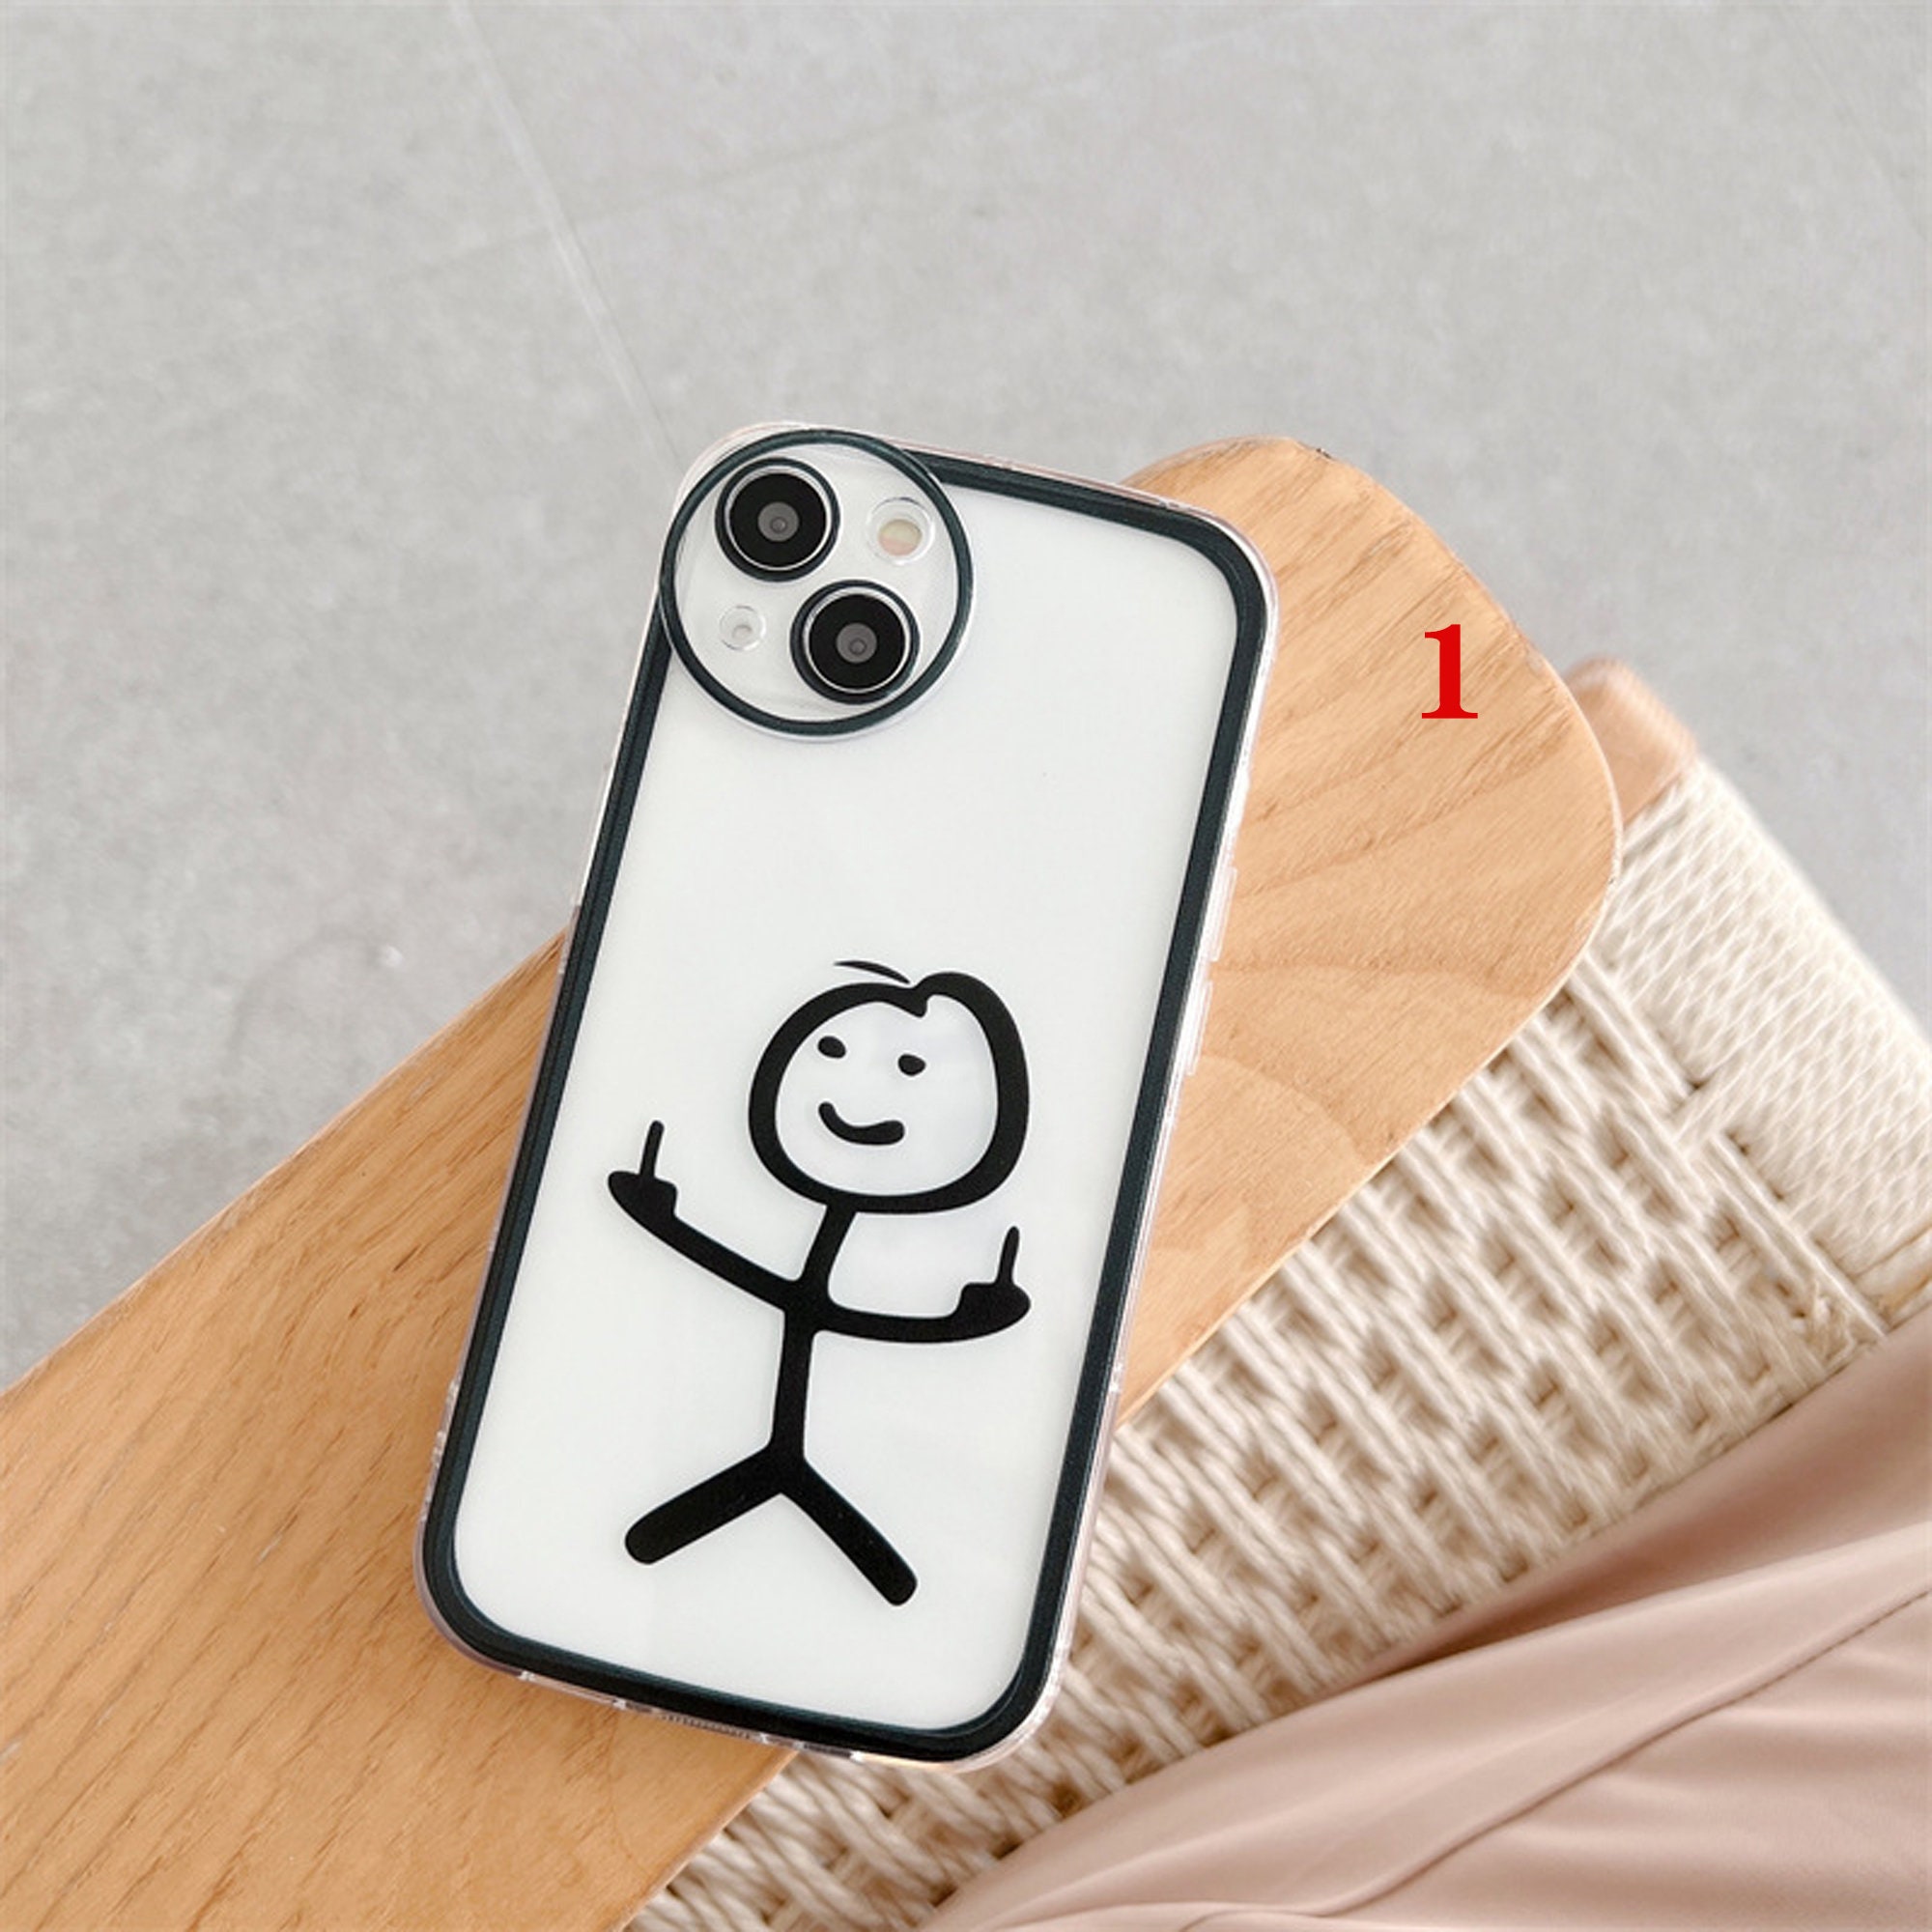 Cartoon Stick Figure Case Cover For iPhone